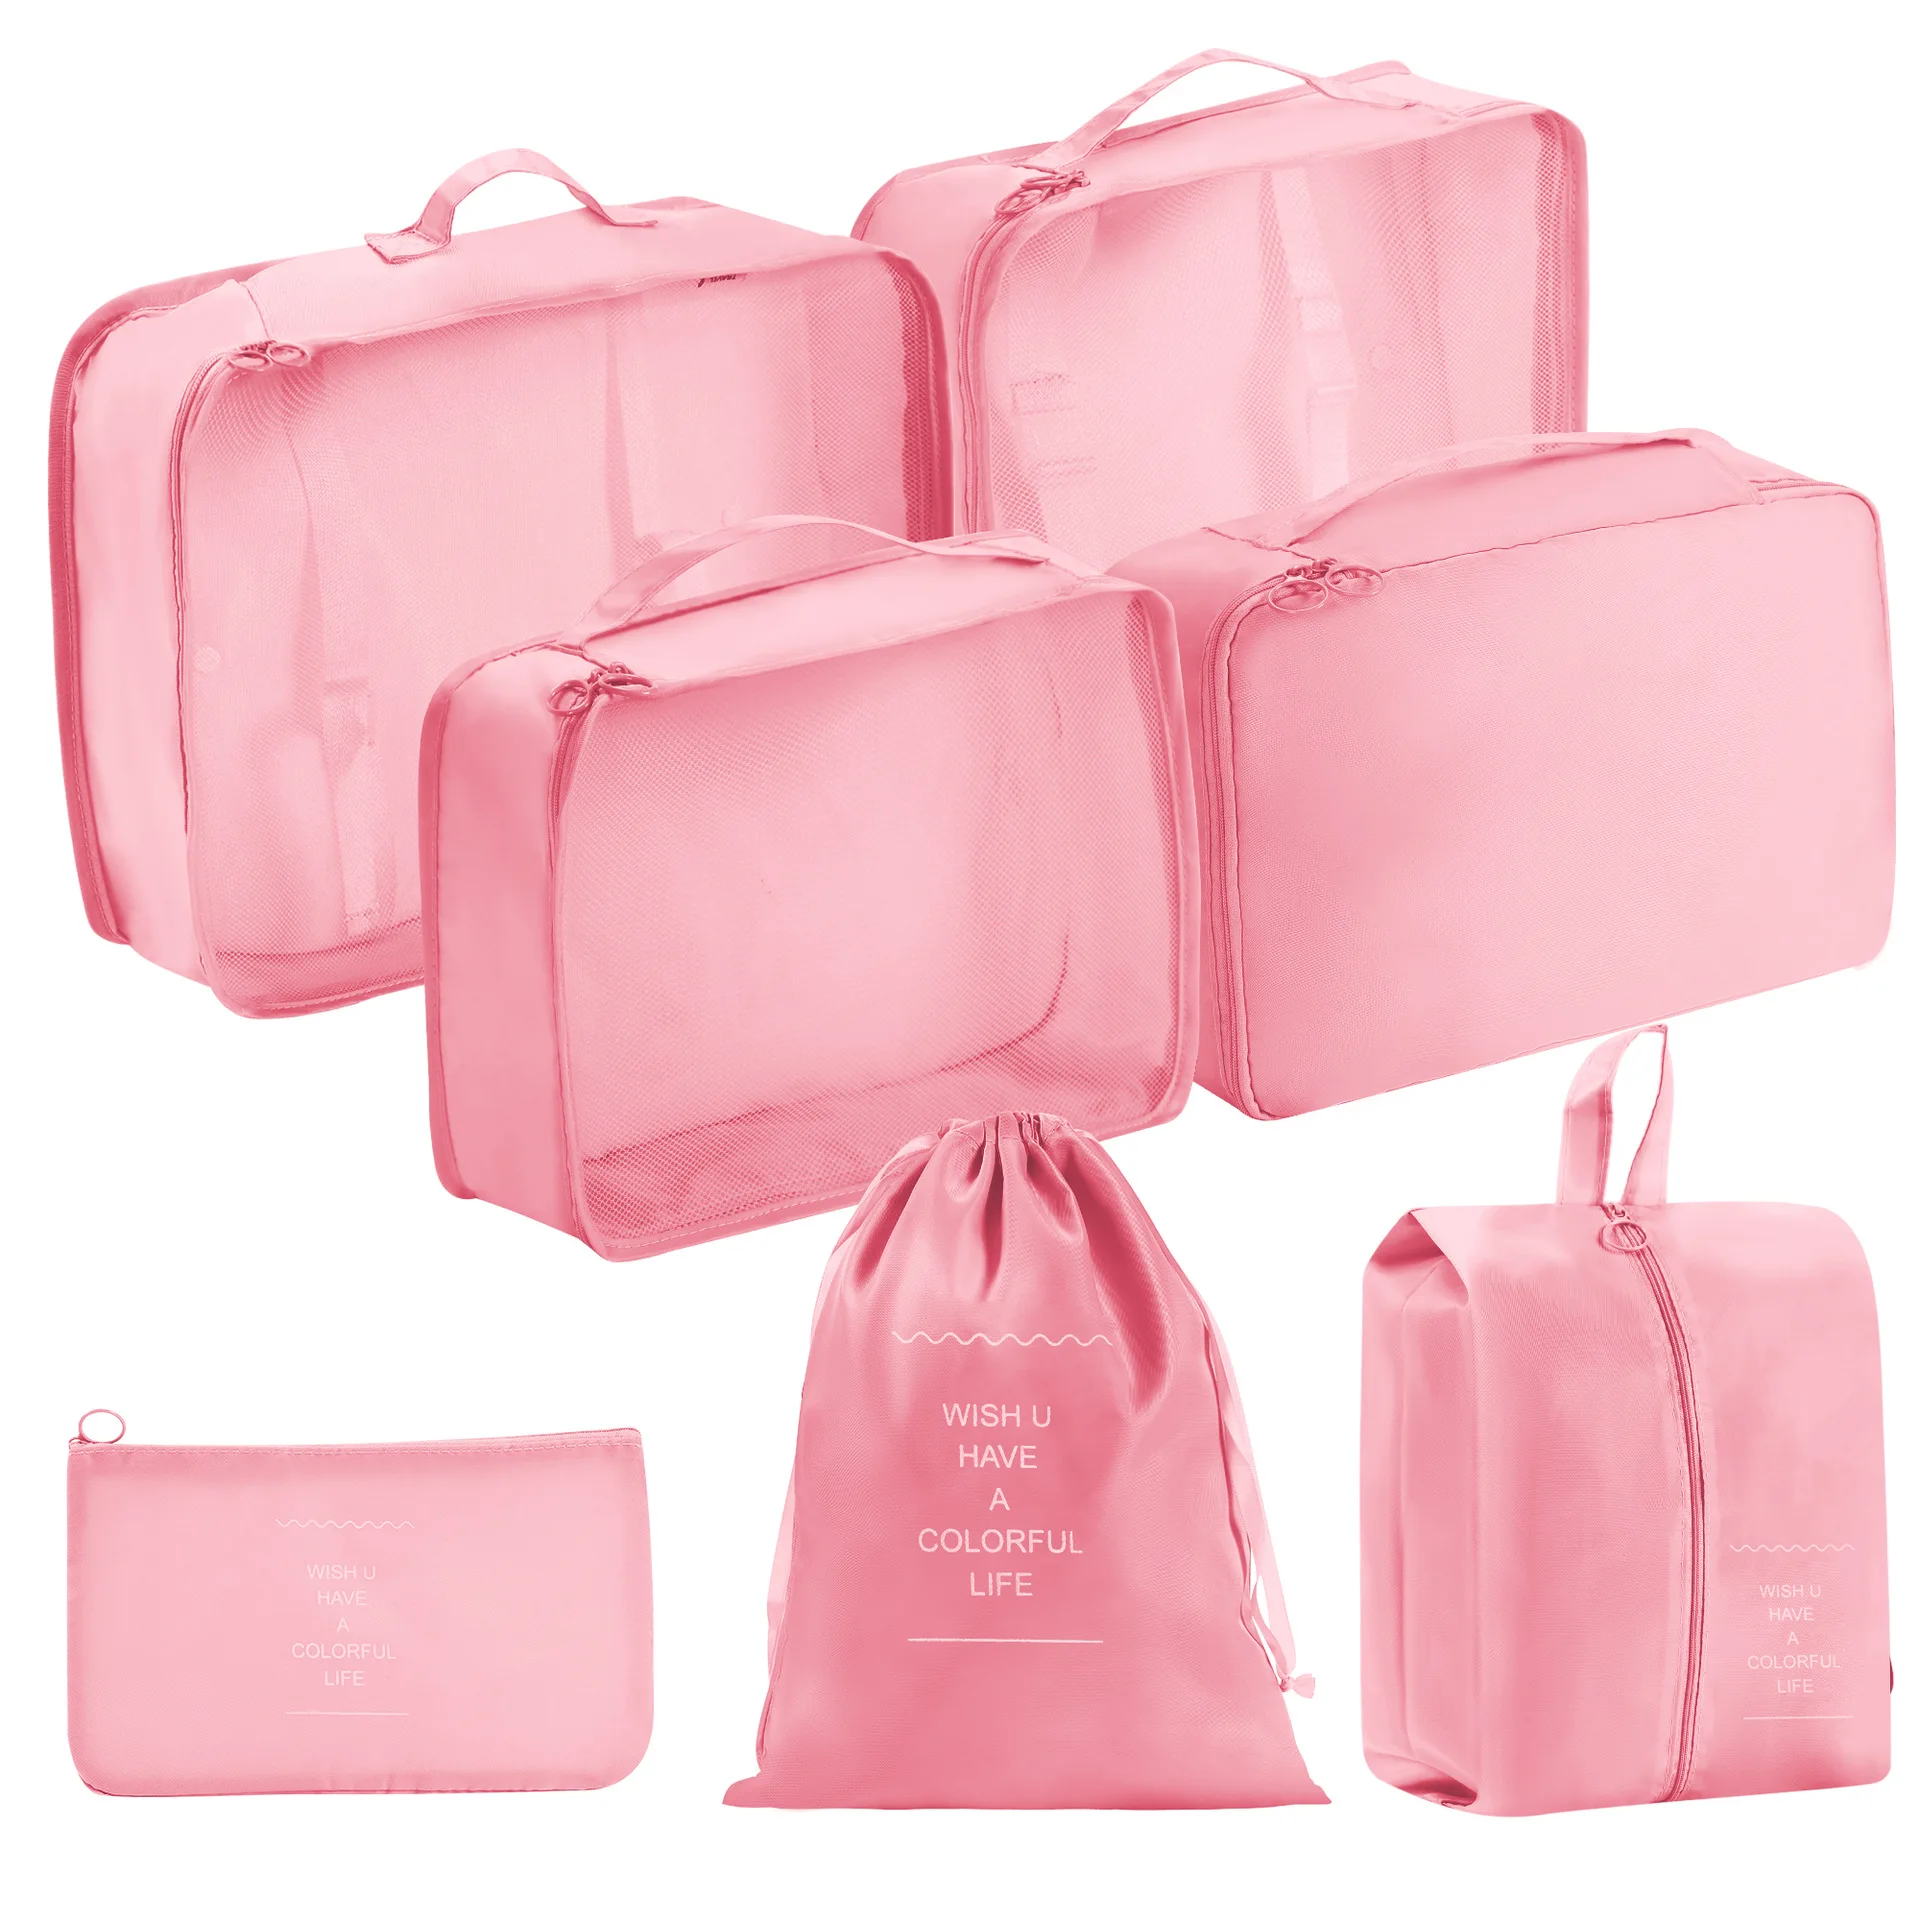 7 PCS Set Portable Travel Storage Bag Set Luggage Packing Bag for Traveling Clothes Shoes Storage Organizer Bag